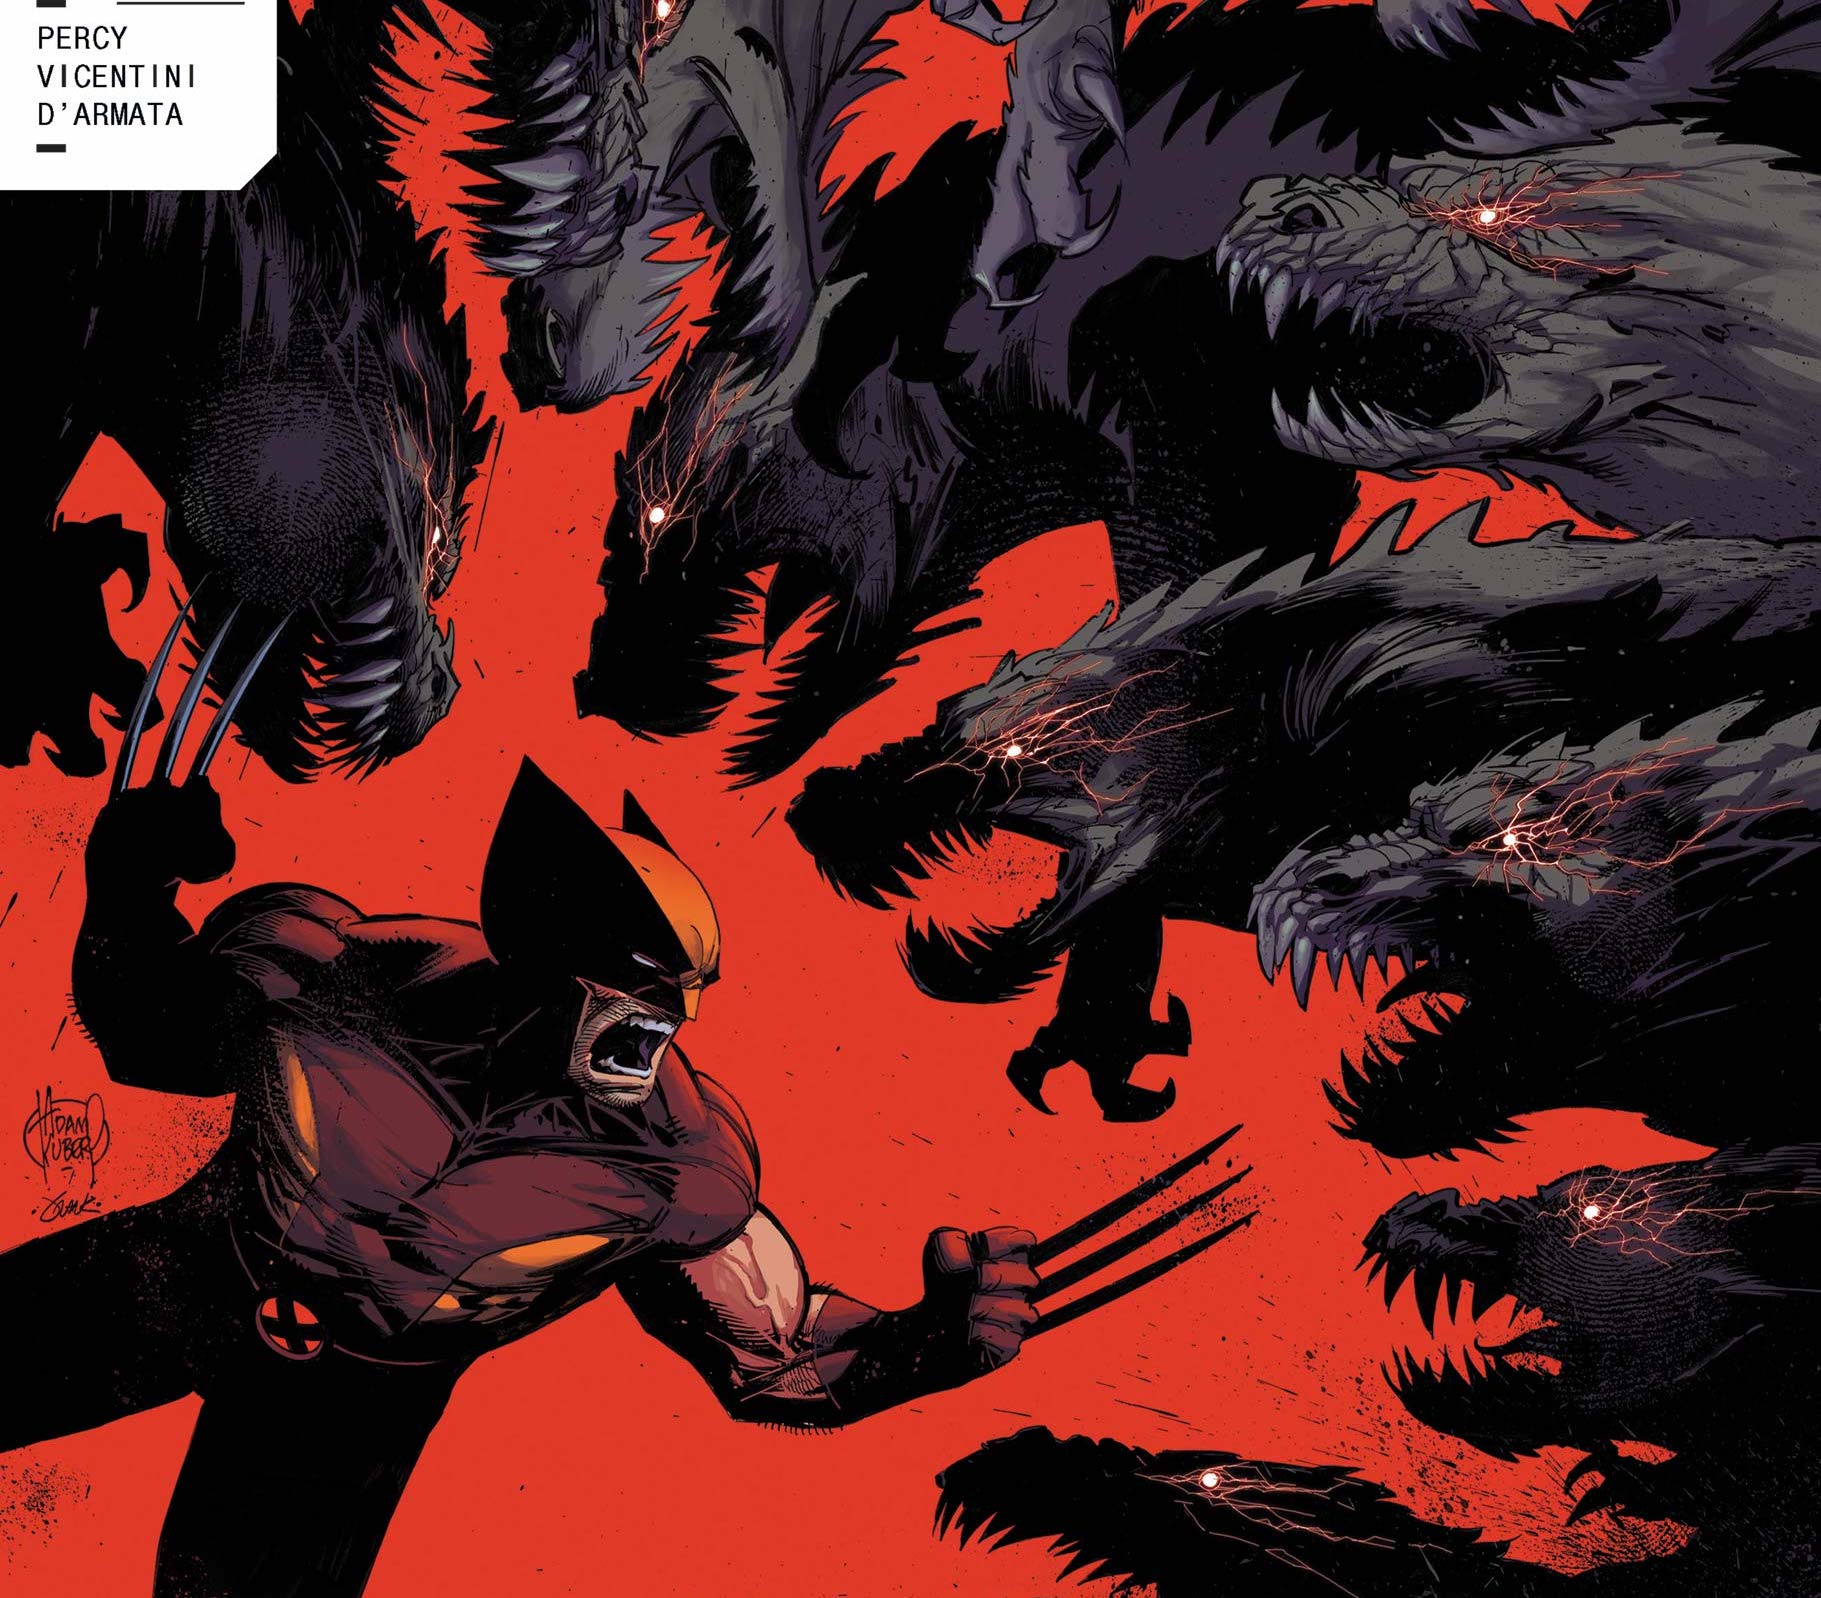 'Wolverine' #24 features exciting fight scenes with Arakki mutant Solem